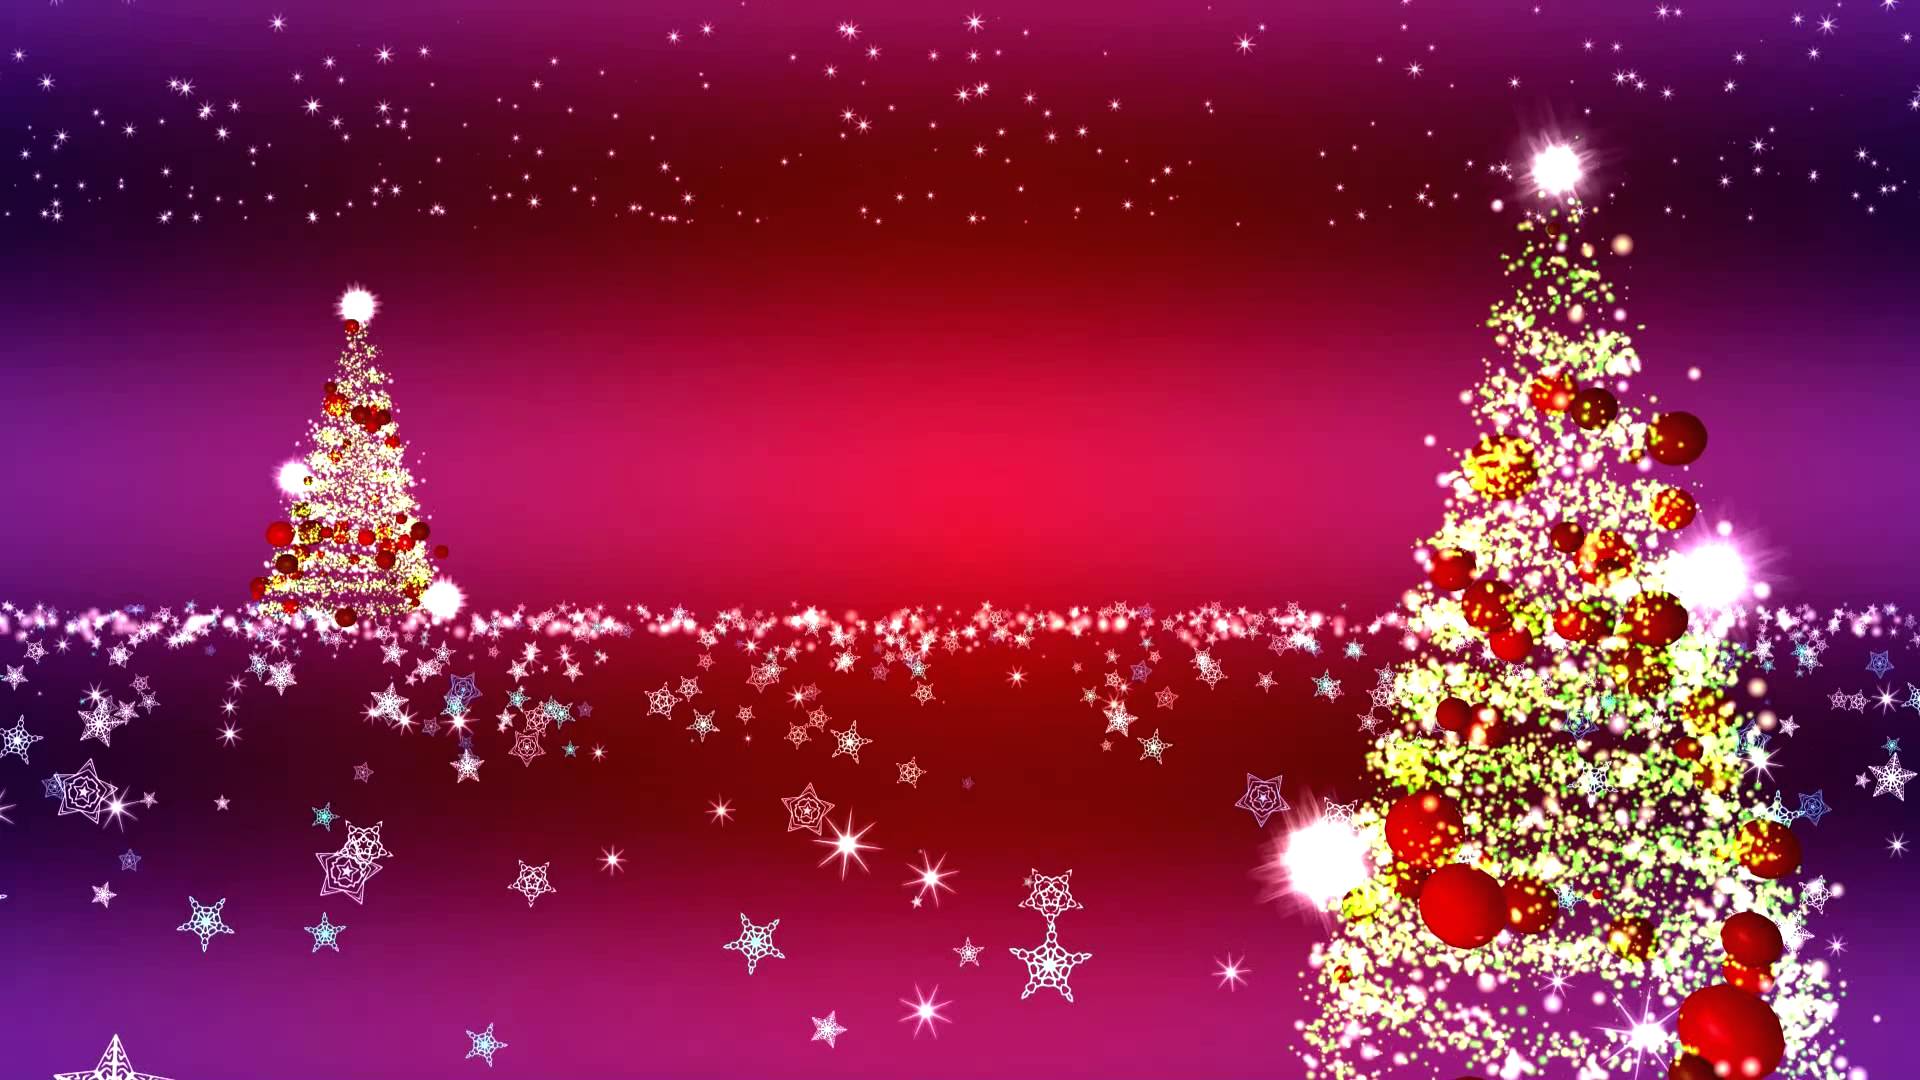 Christmas background pics